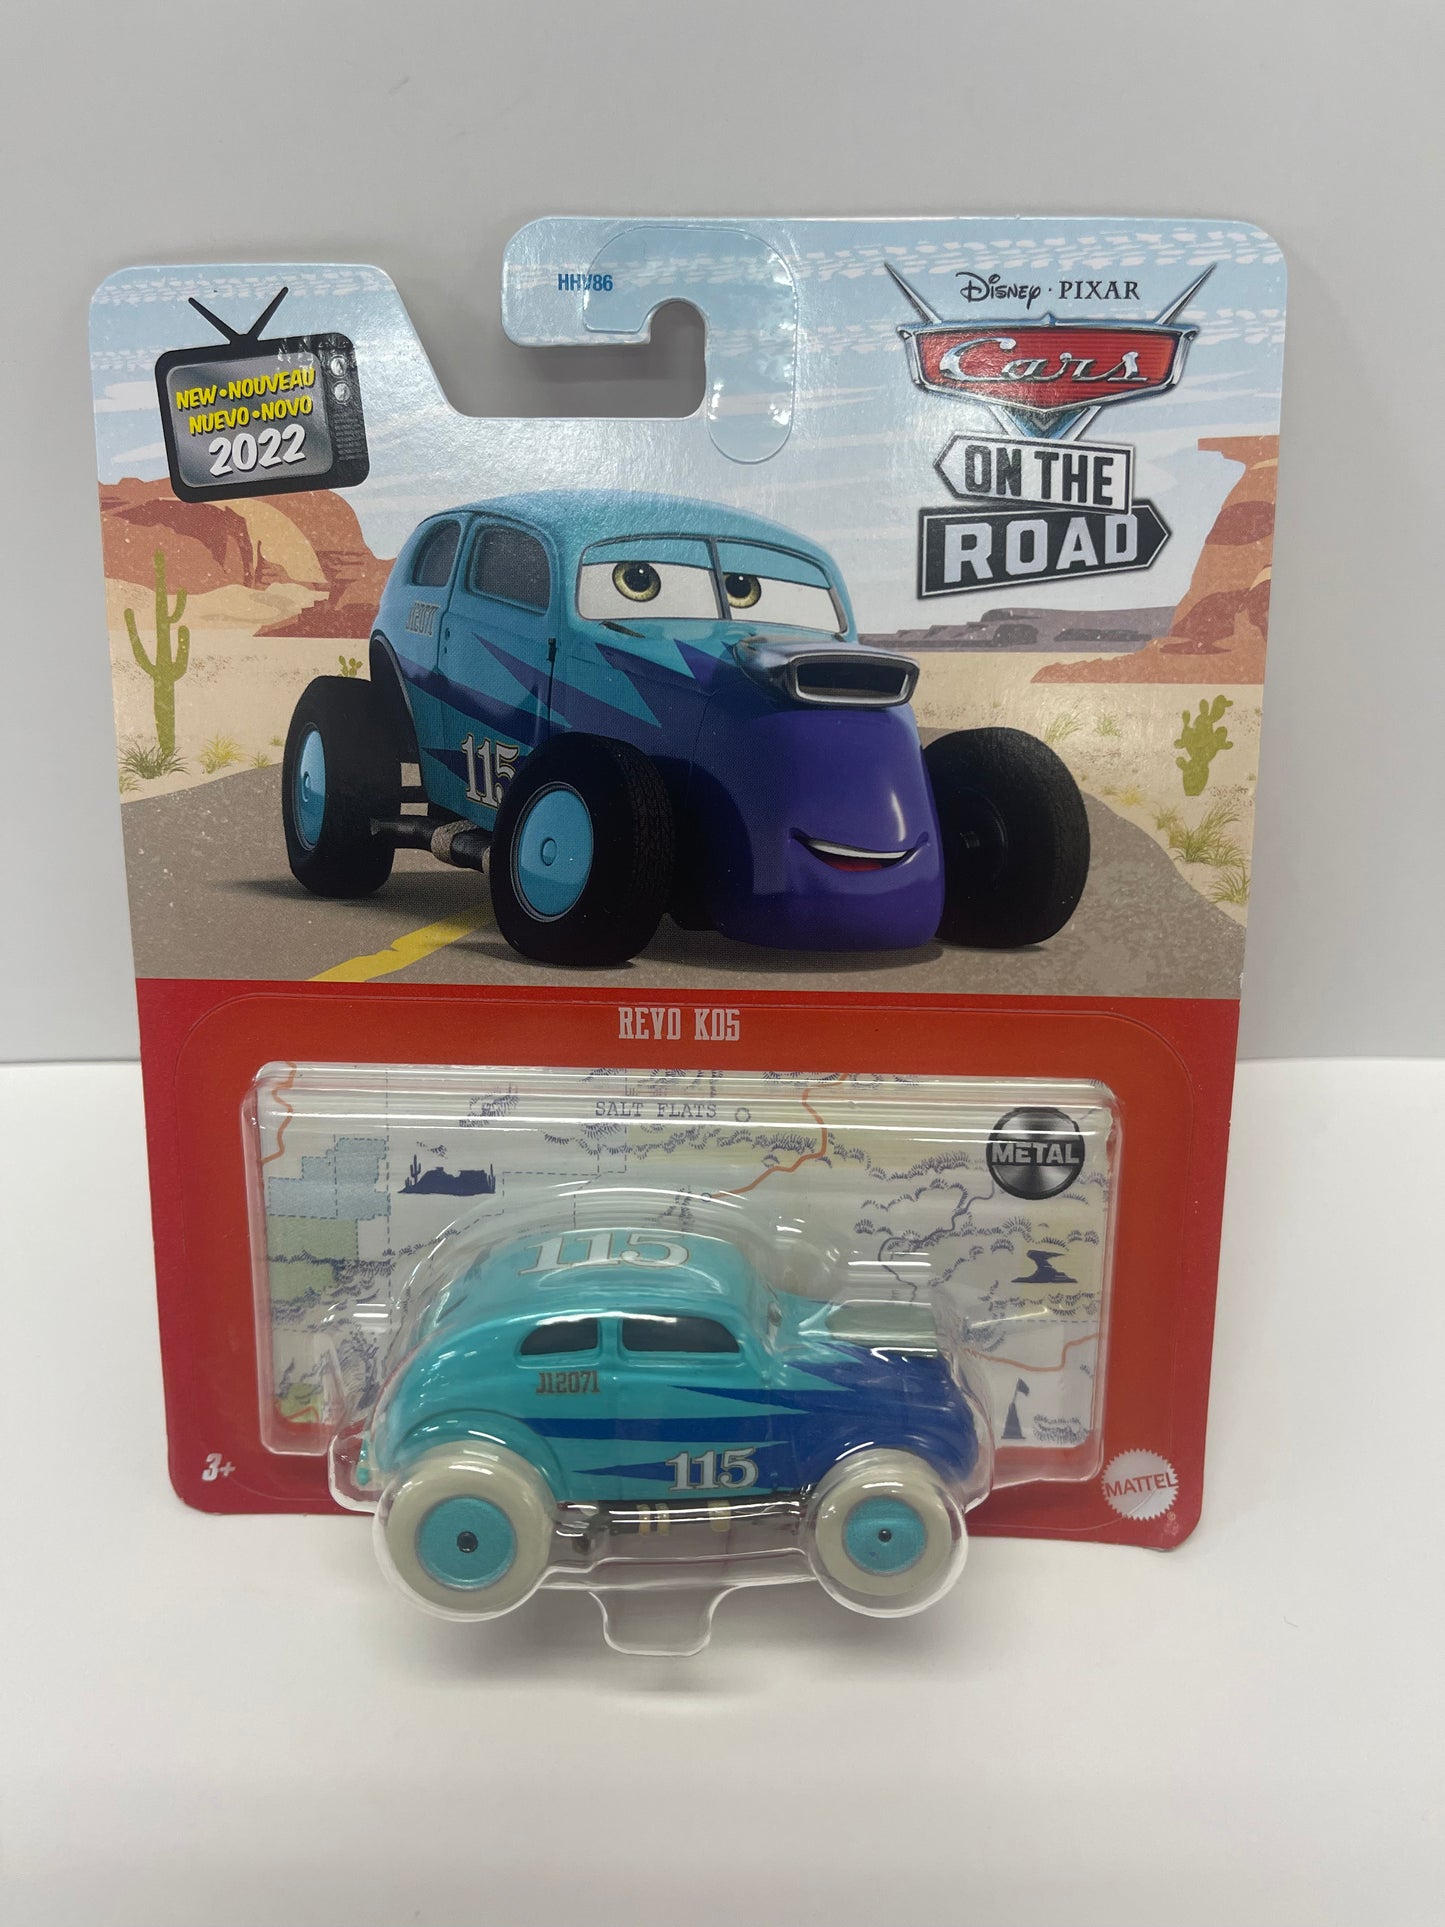 Disney Pixar Cars "On The Road" 1:55